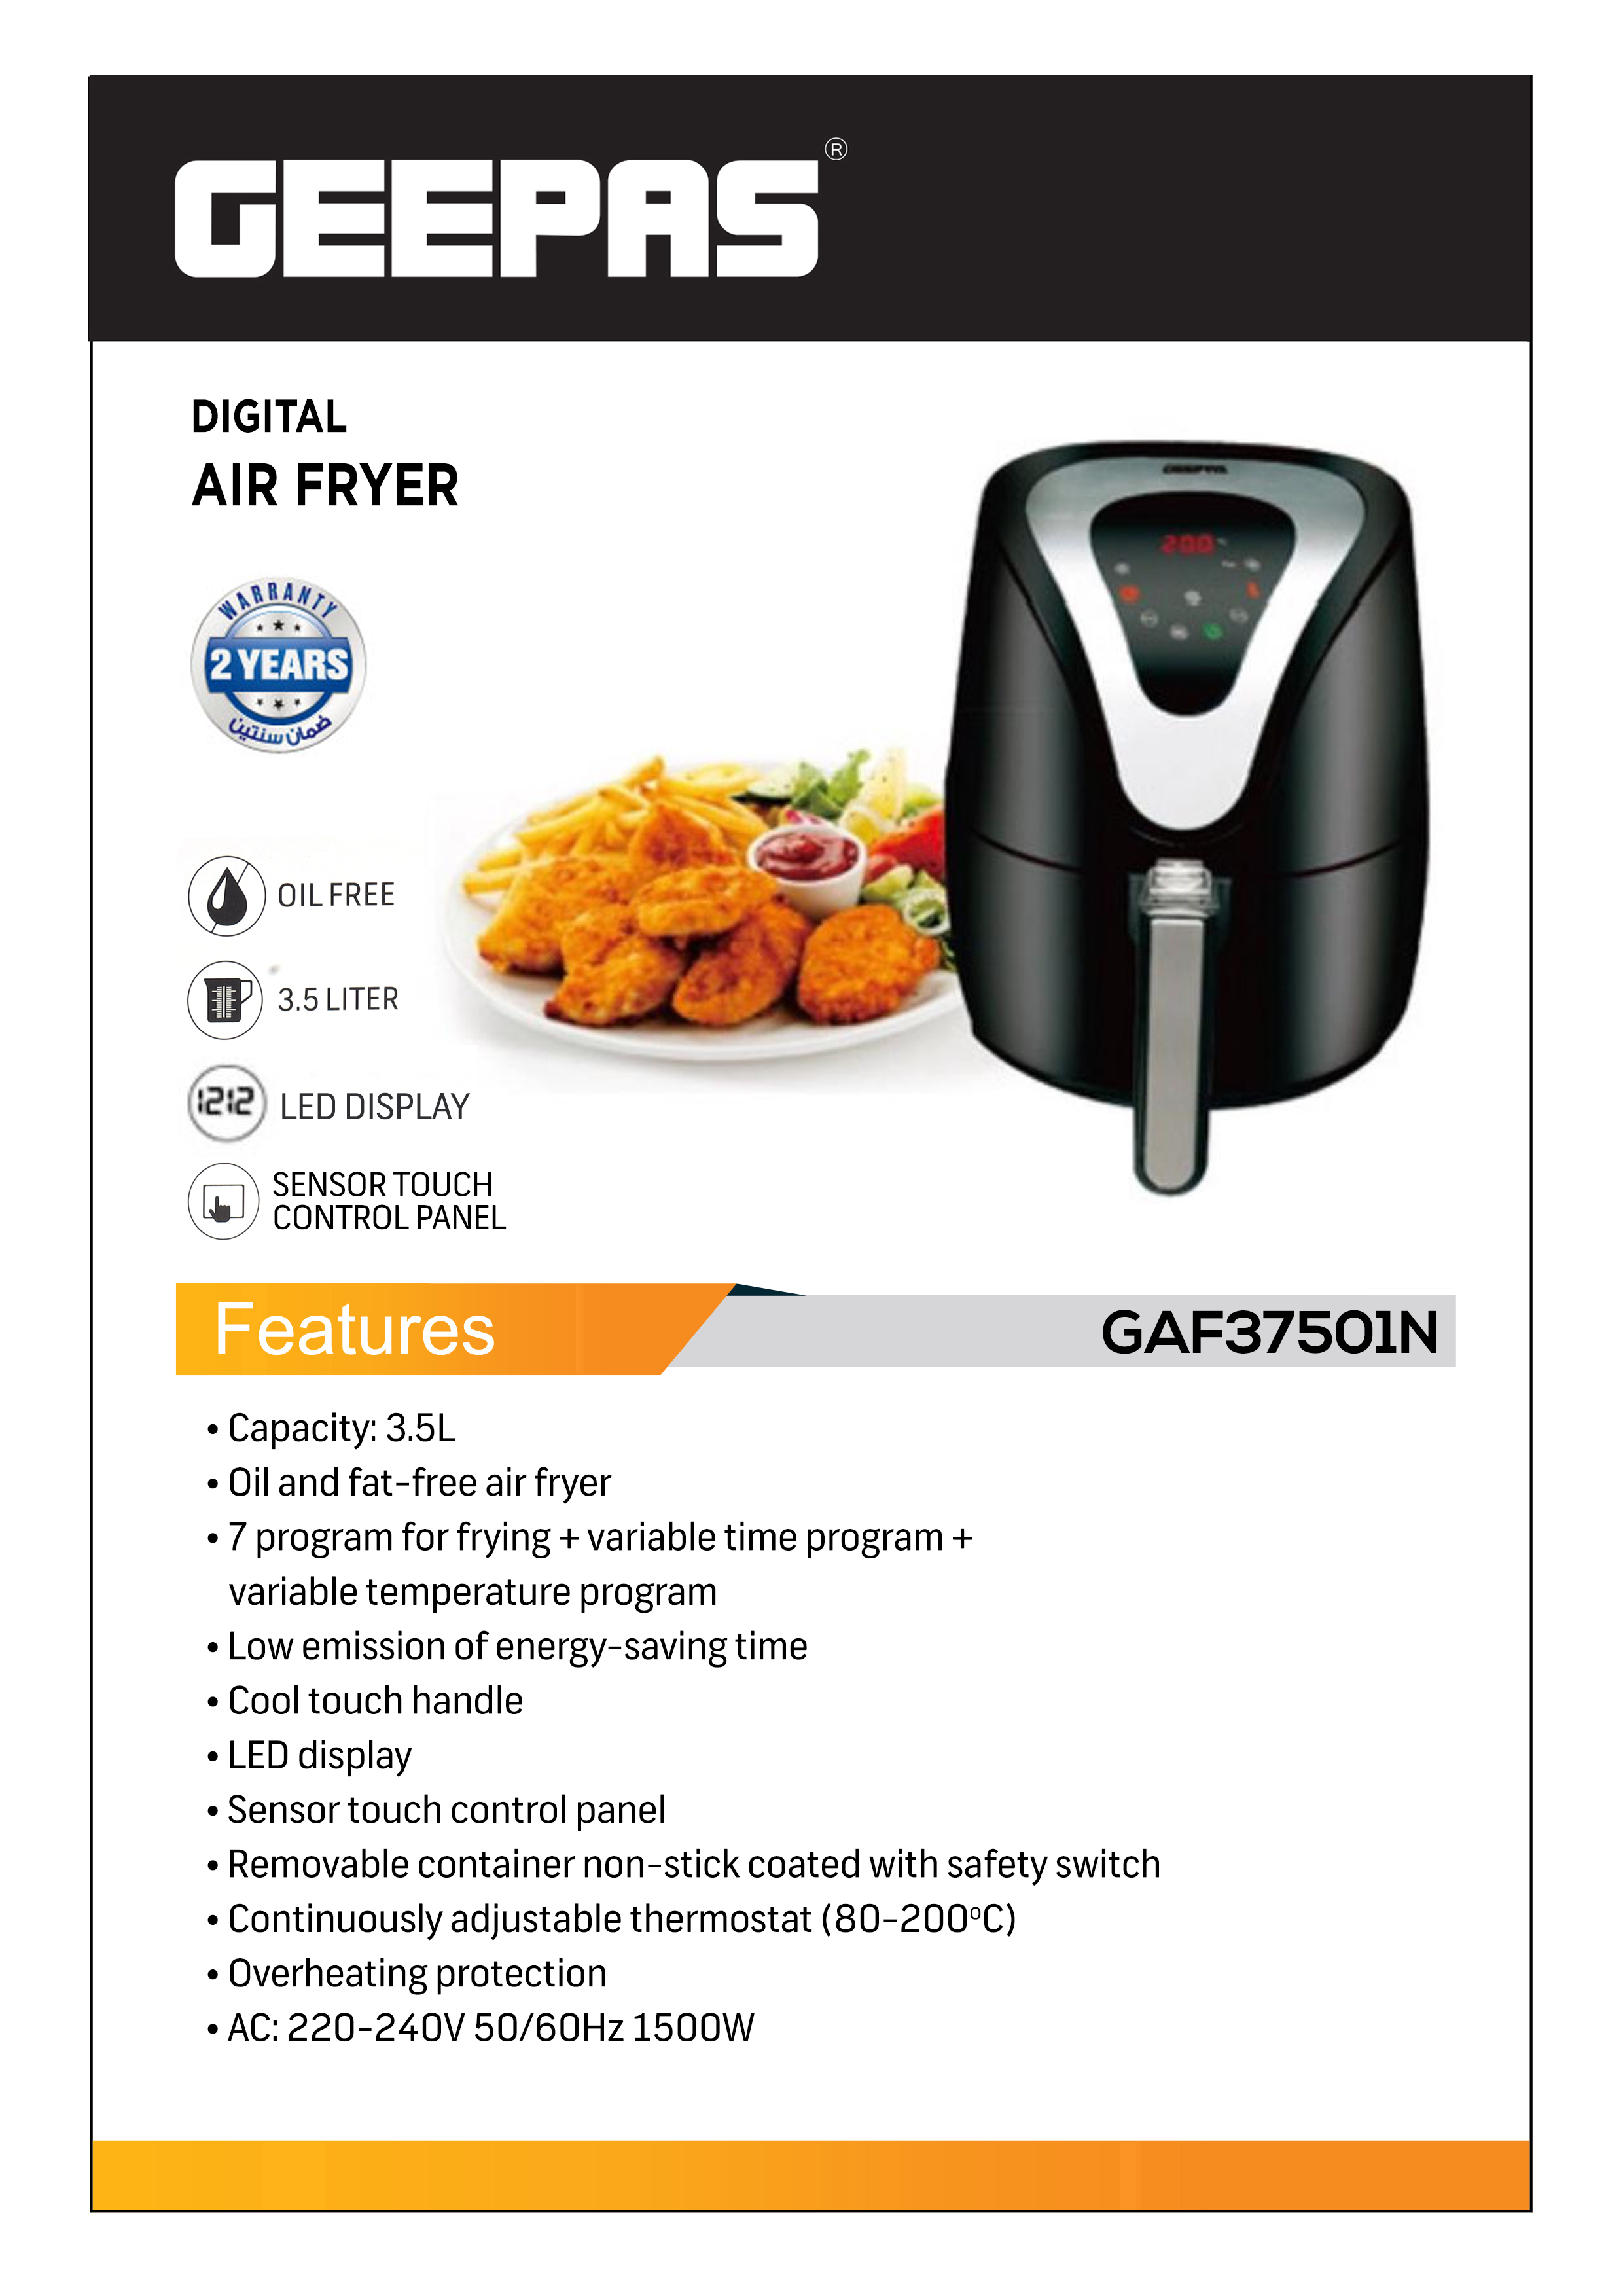 Geepas GAF37501 1500W Digital Air Fryer 3.5L- Hot Air Circulation  Technology for Oil Free Low